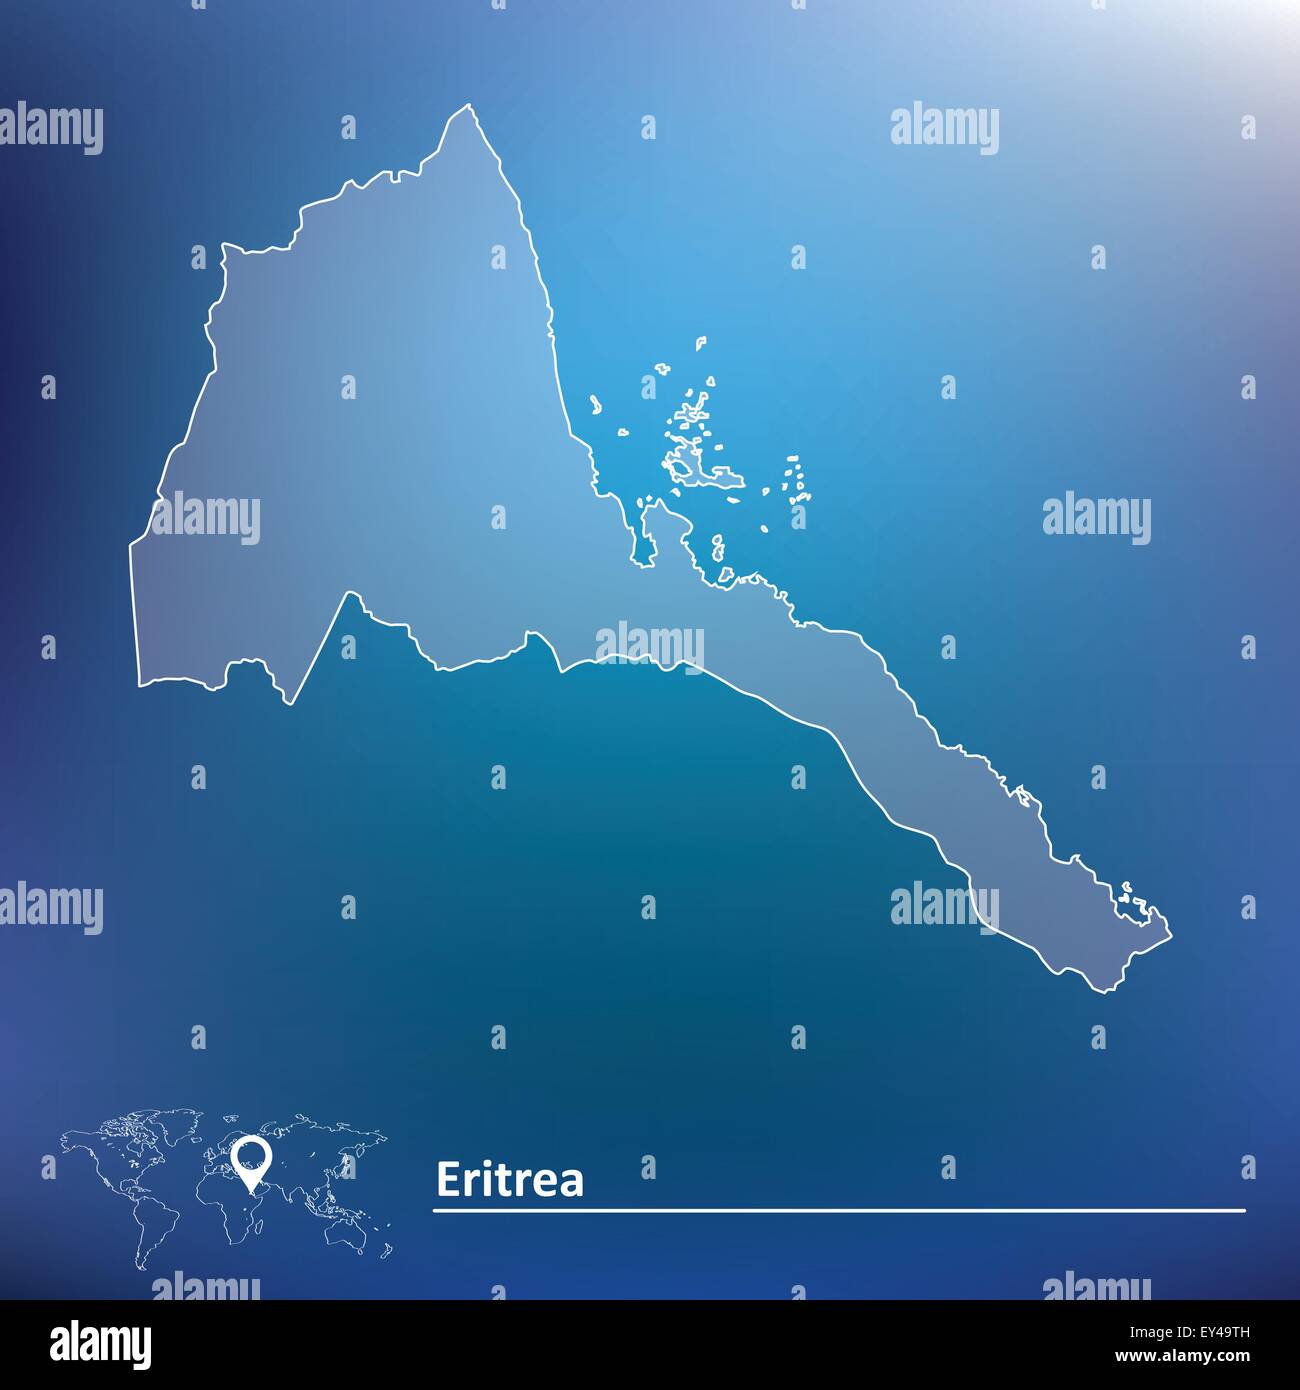 Map of Eritrea - vector illustration Stock Vector